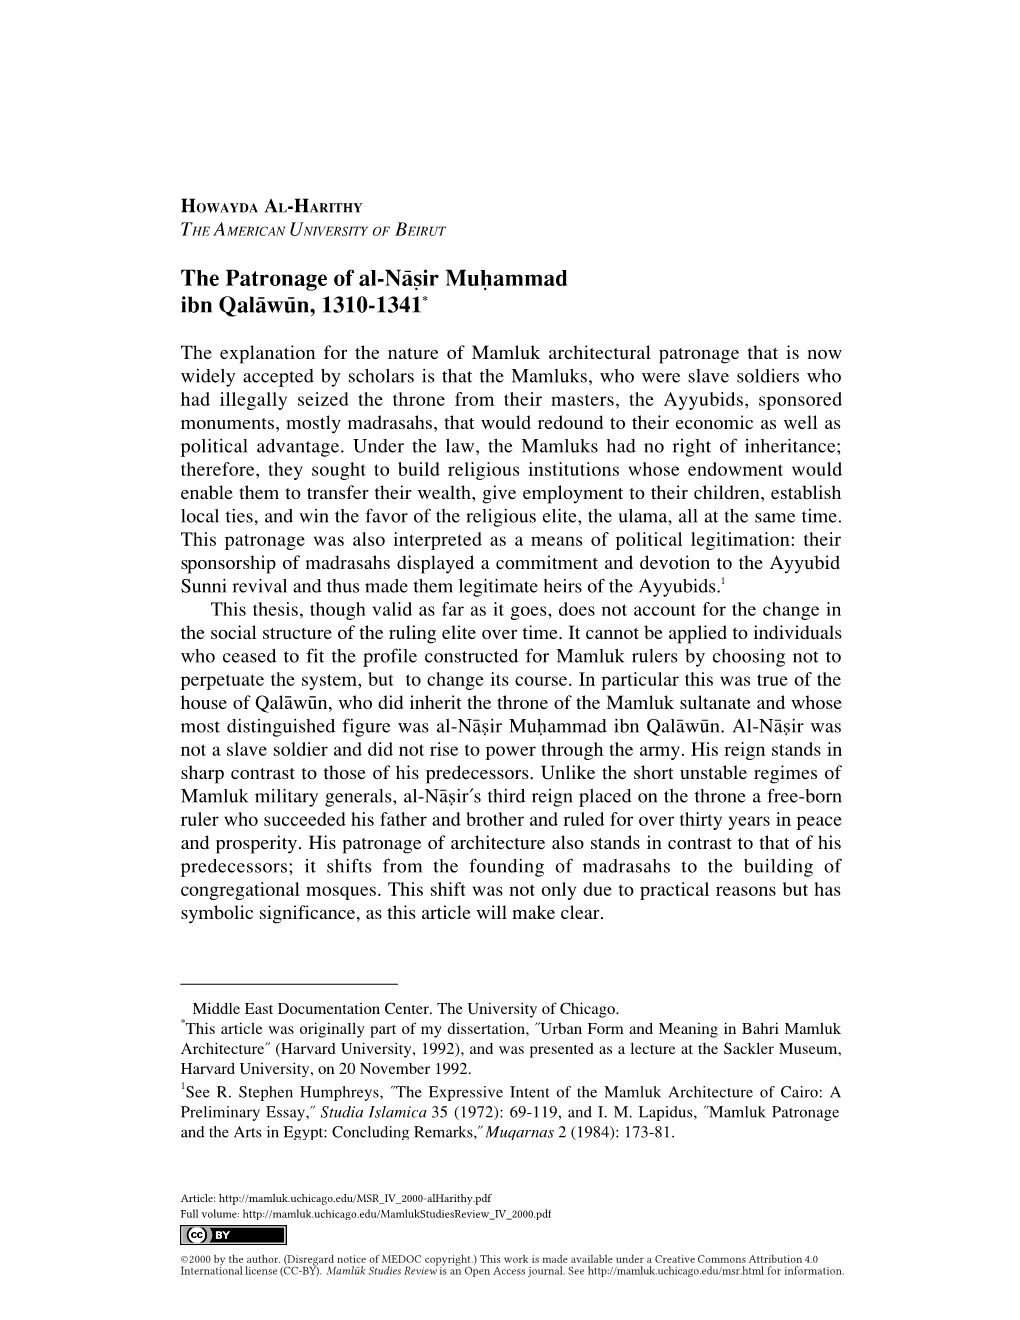 The Patronage of Al-Nasir Muhammad Ibn Qalawun, 1310-1341 (MSR IV, 2000)